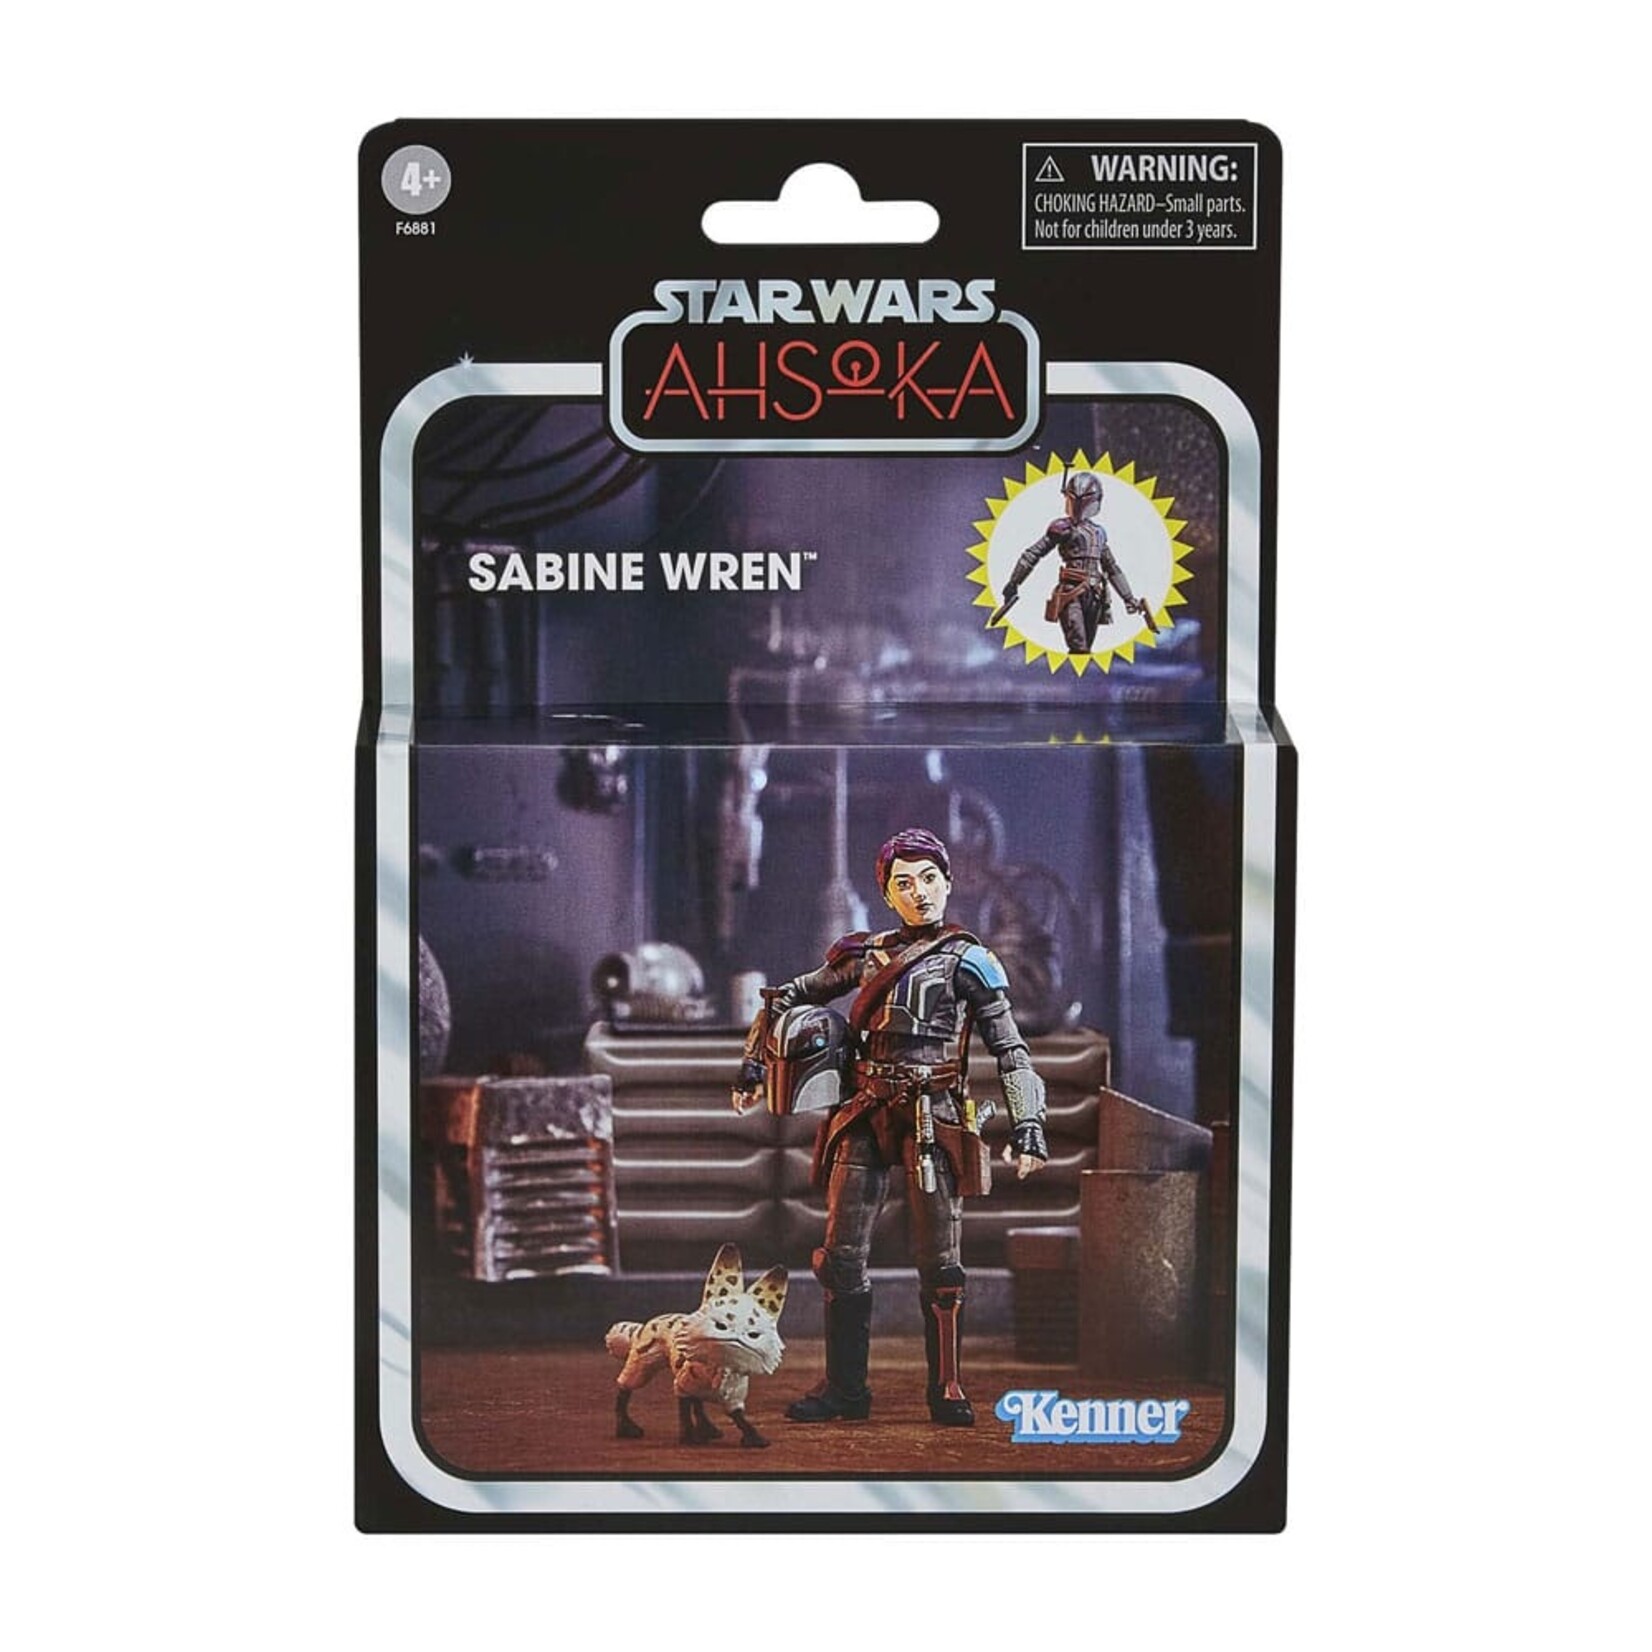 Hasbro Hasbro Star Wars Ahsoka Deluxe Action Figure Sabine Wren 10 cm